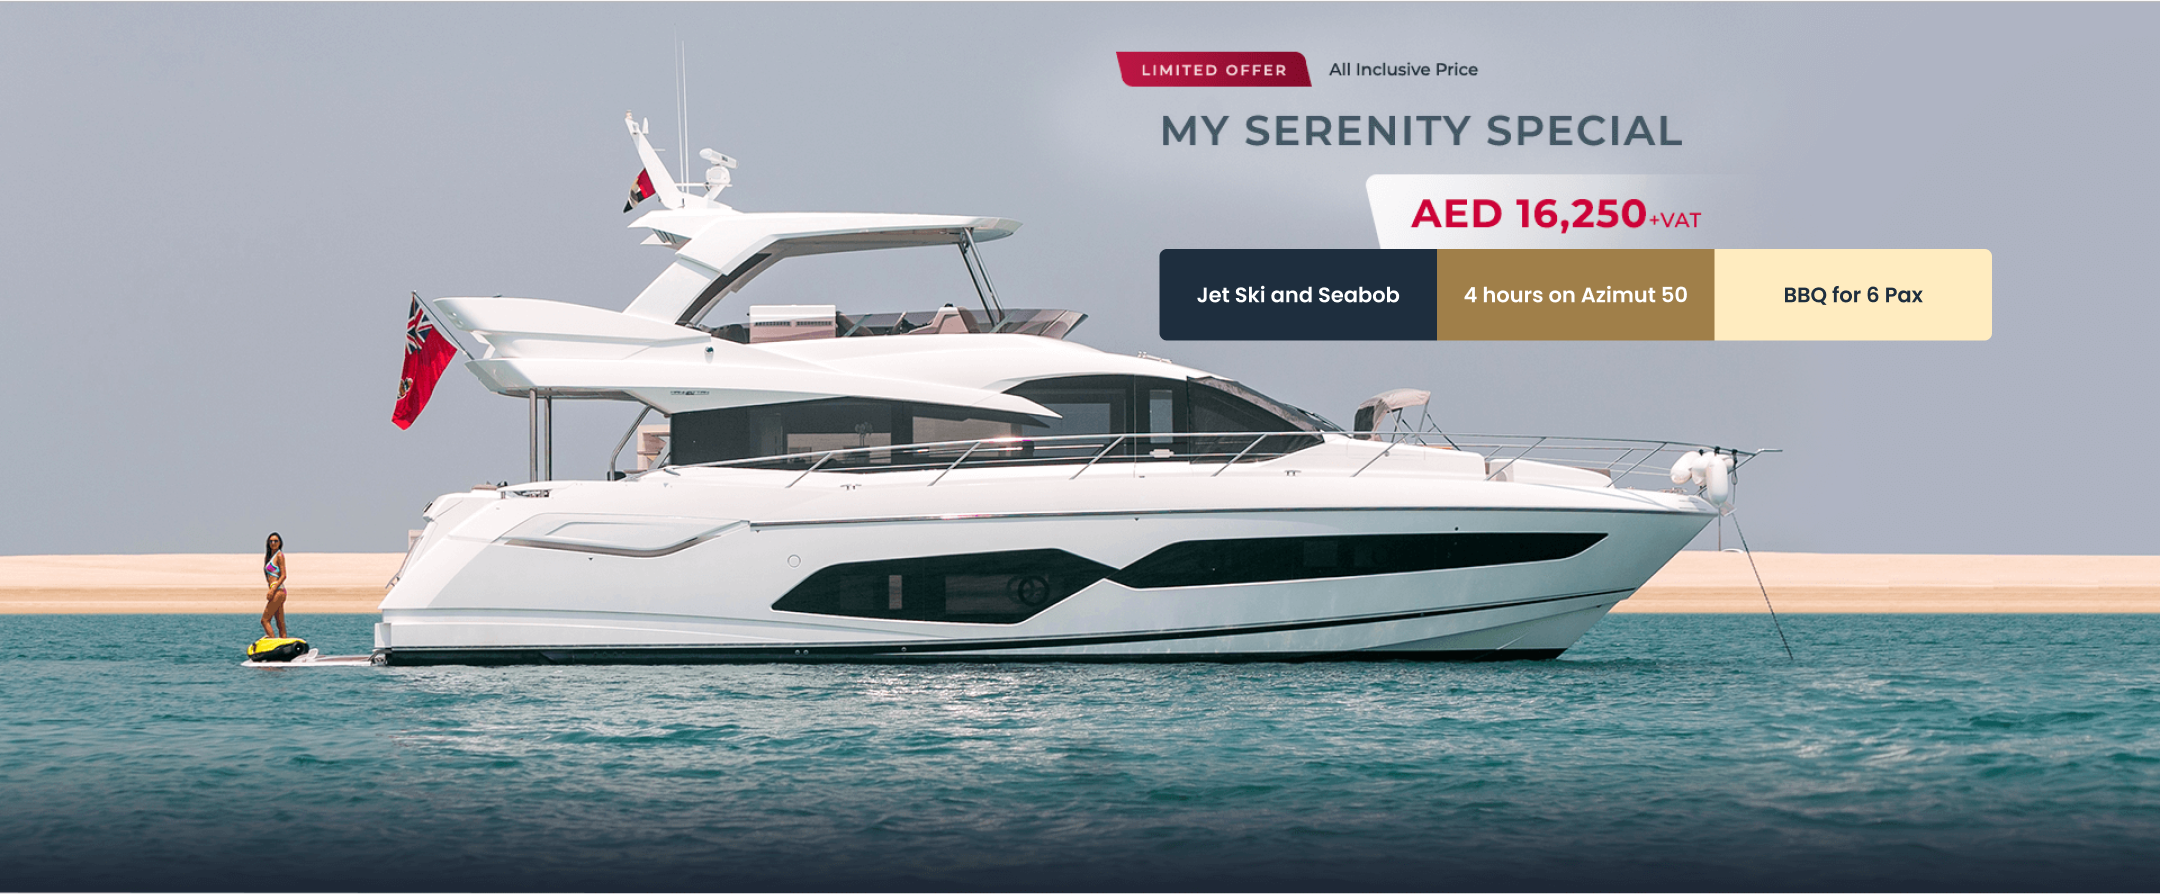 Dubai yachts offers